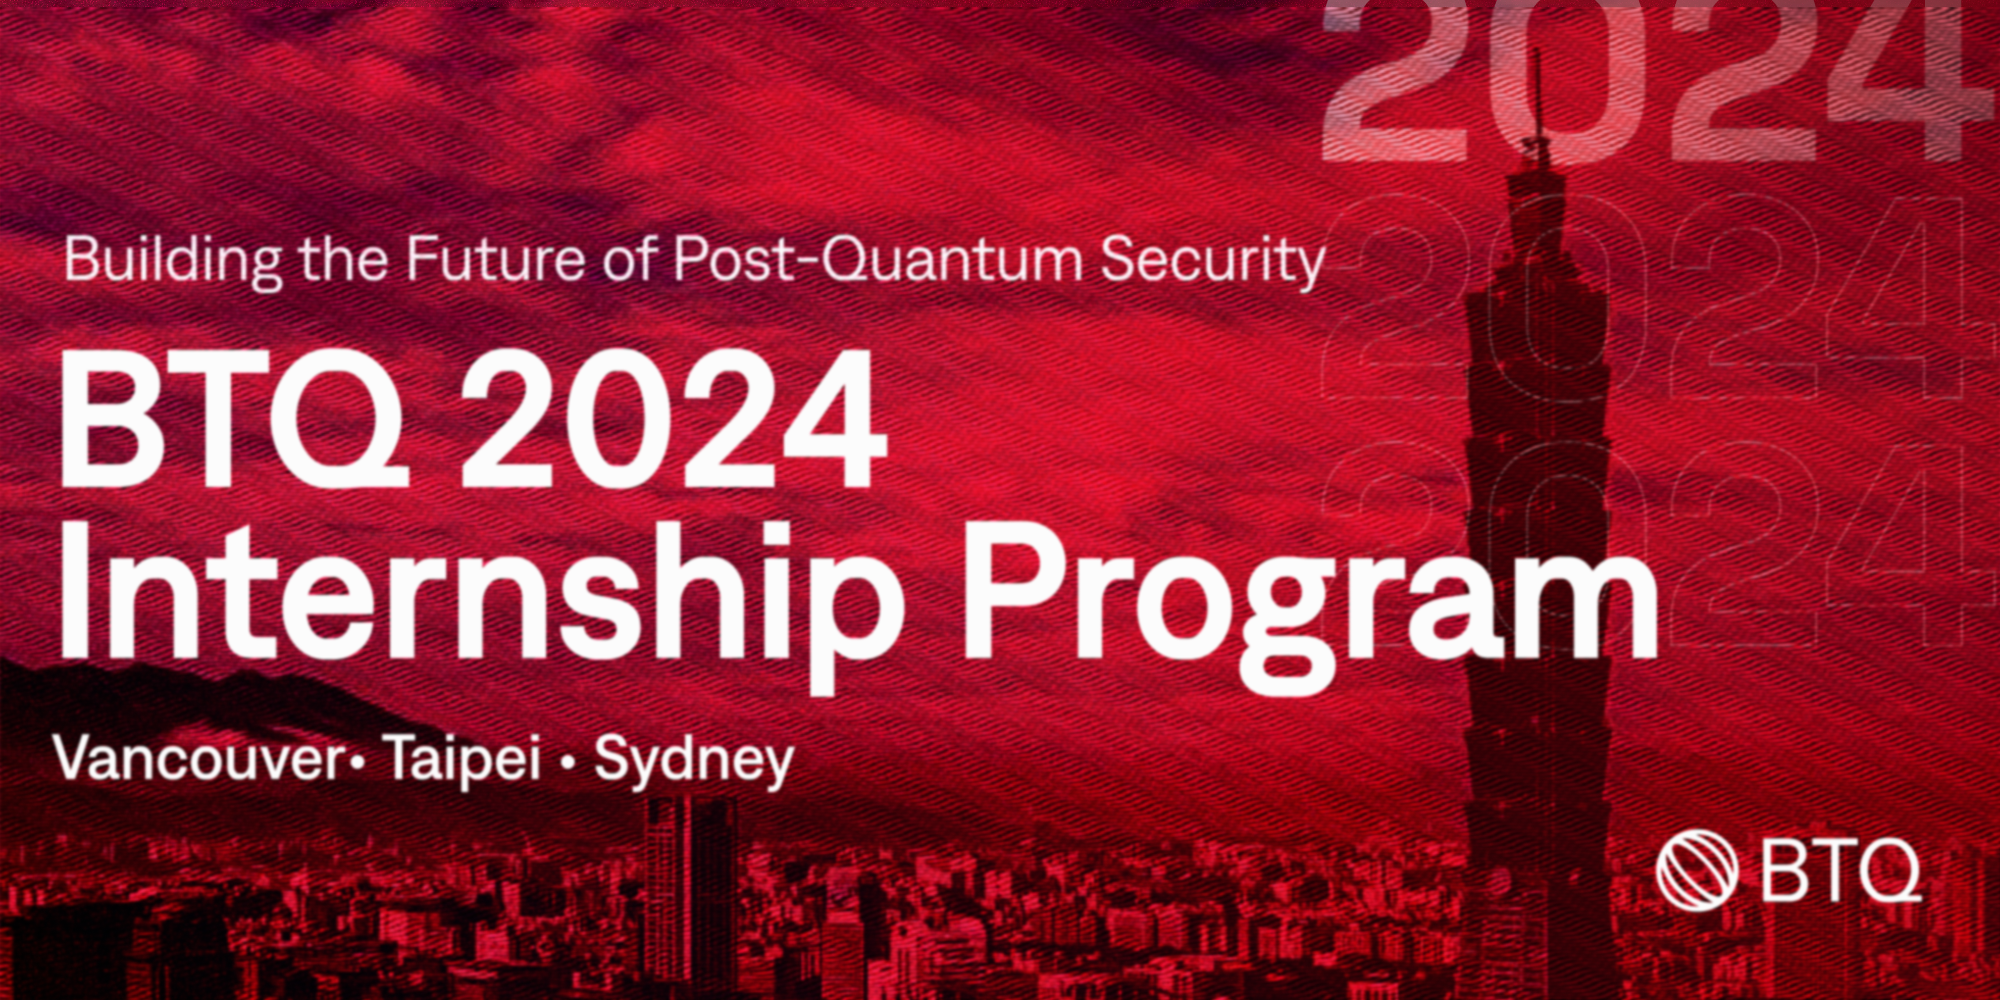 BTQ Technologies 2024 Internship Program: Building the Future of Post-Quantum Security cover